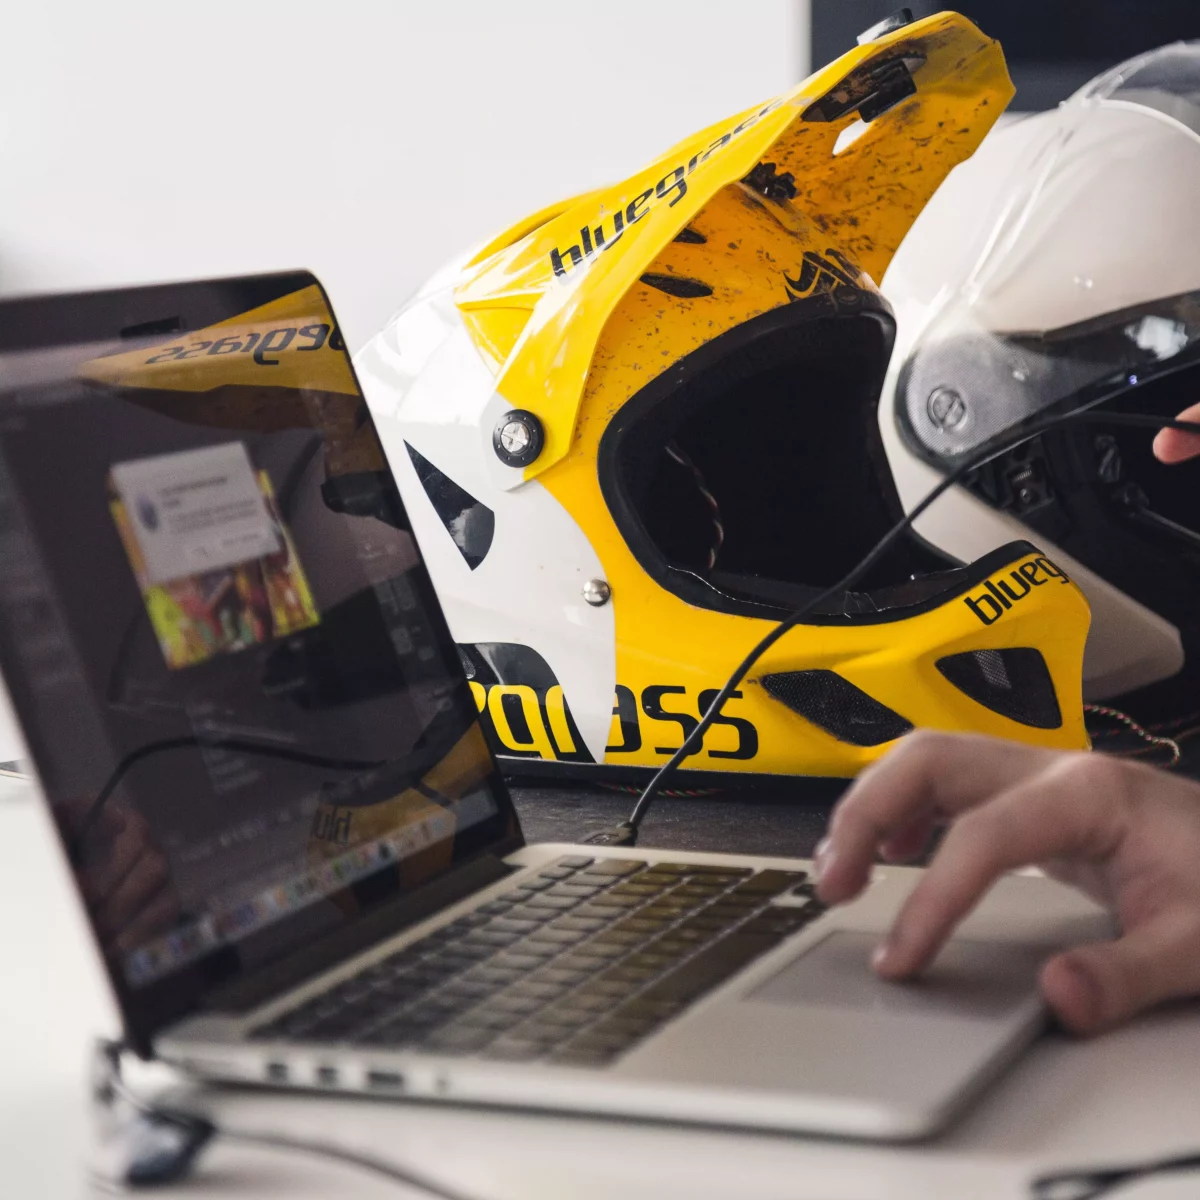 KISKA creative technologist tests a connected helmet prototype